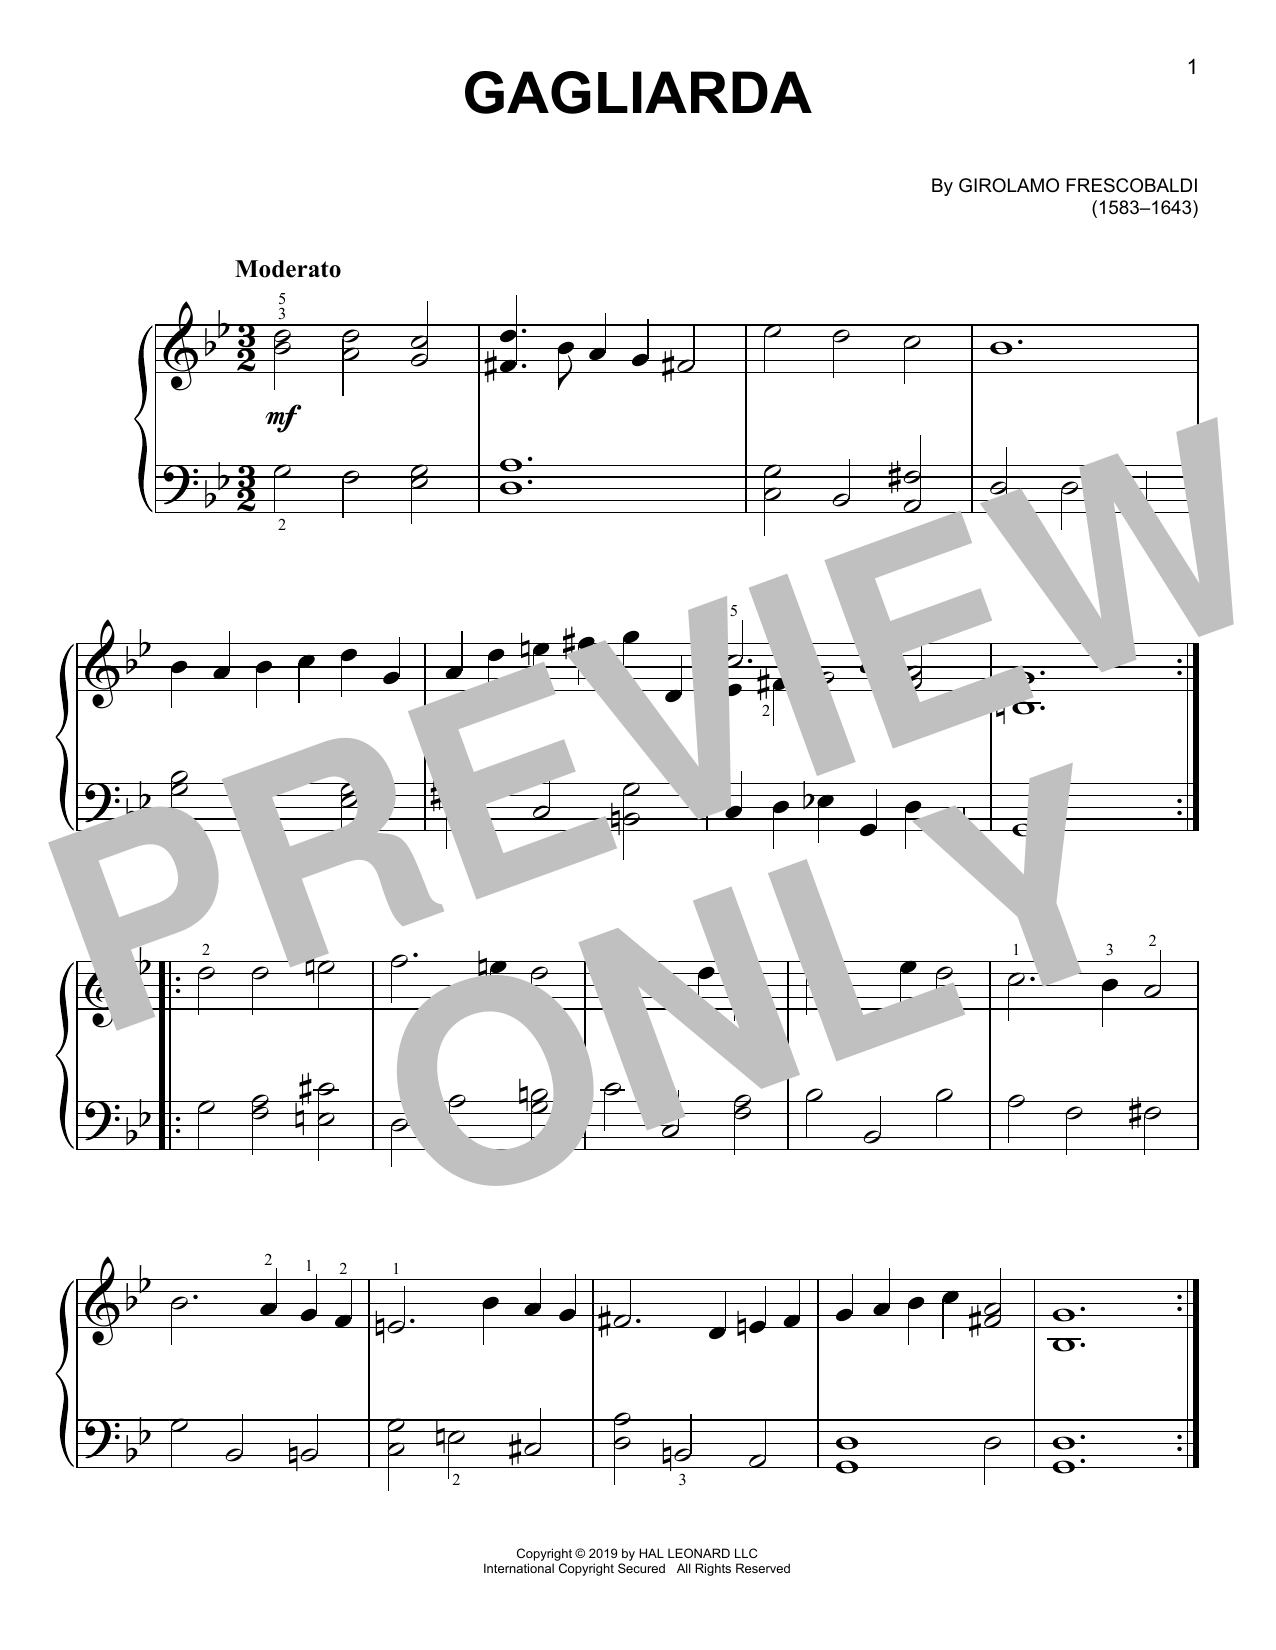 Girolamo Frescobaldi Gagliarda Sheet Music Notes & Chords for Easy Piano - Download or Print PDF